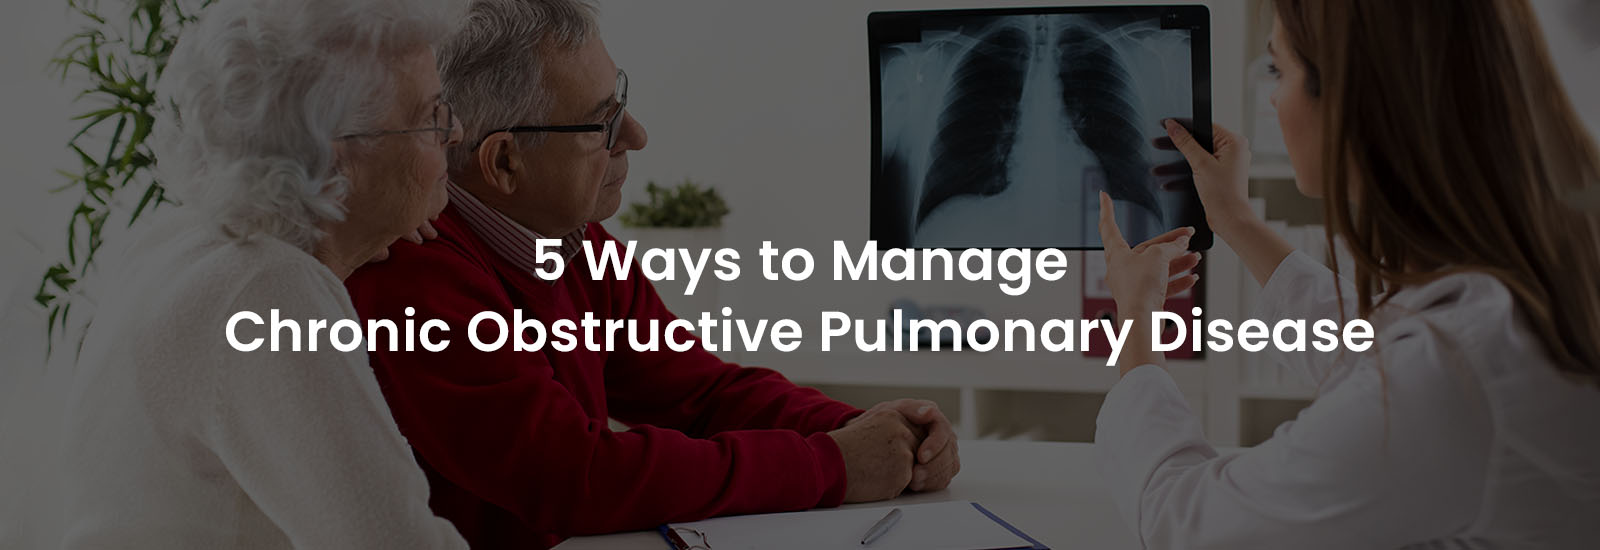 5 Ways to Manage Chronic Obstructive Pulmonary Disease | Banner Image